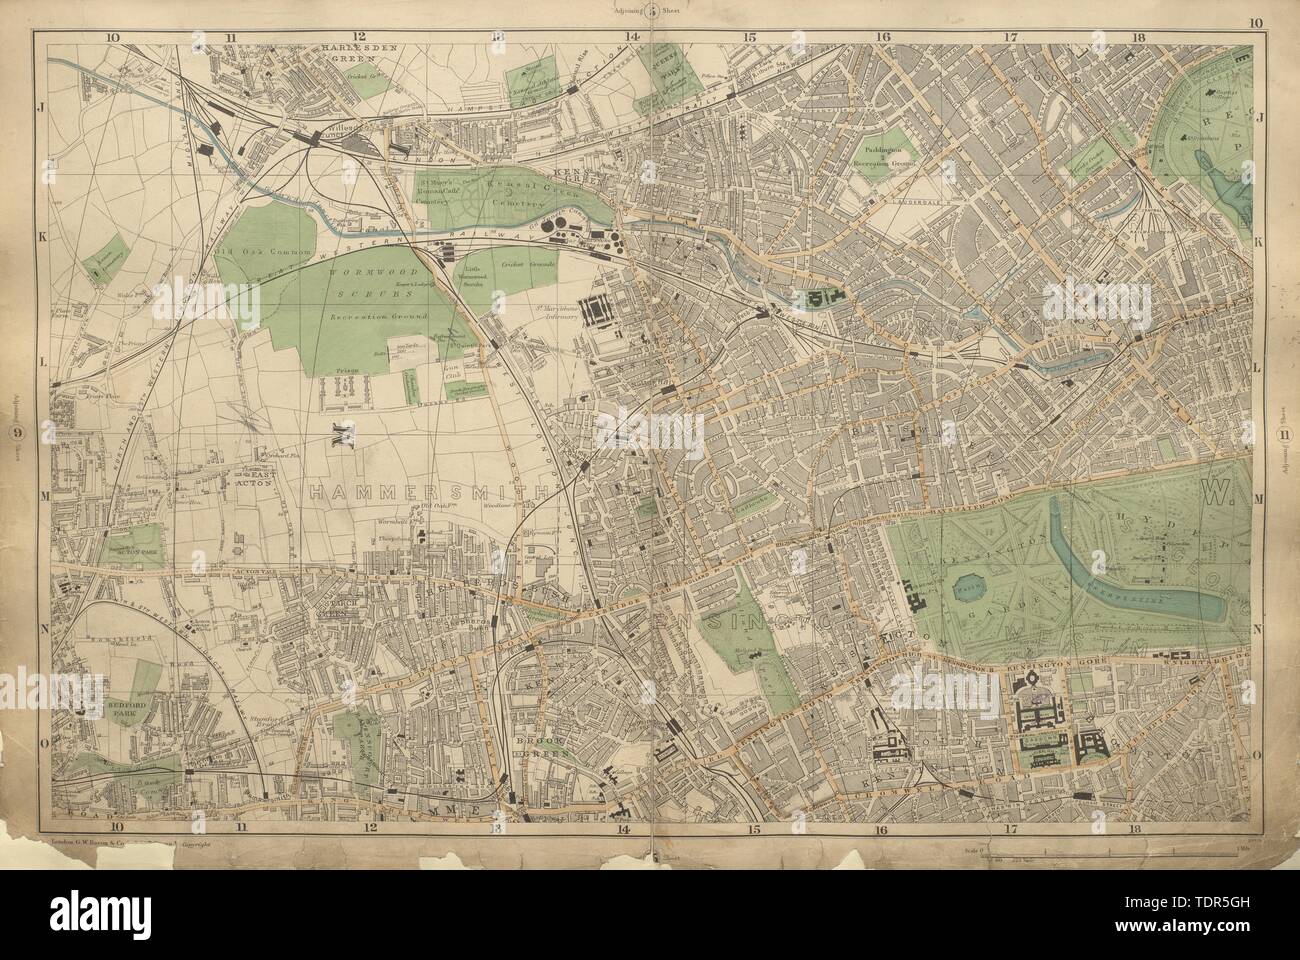 LONDON Notting Hill Kensington St Johns Wd Bayswater Hammersmith BACON 1900 map Stock Photo